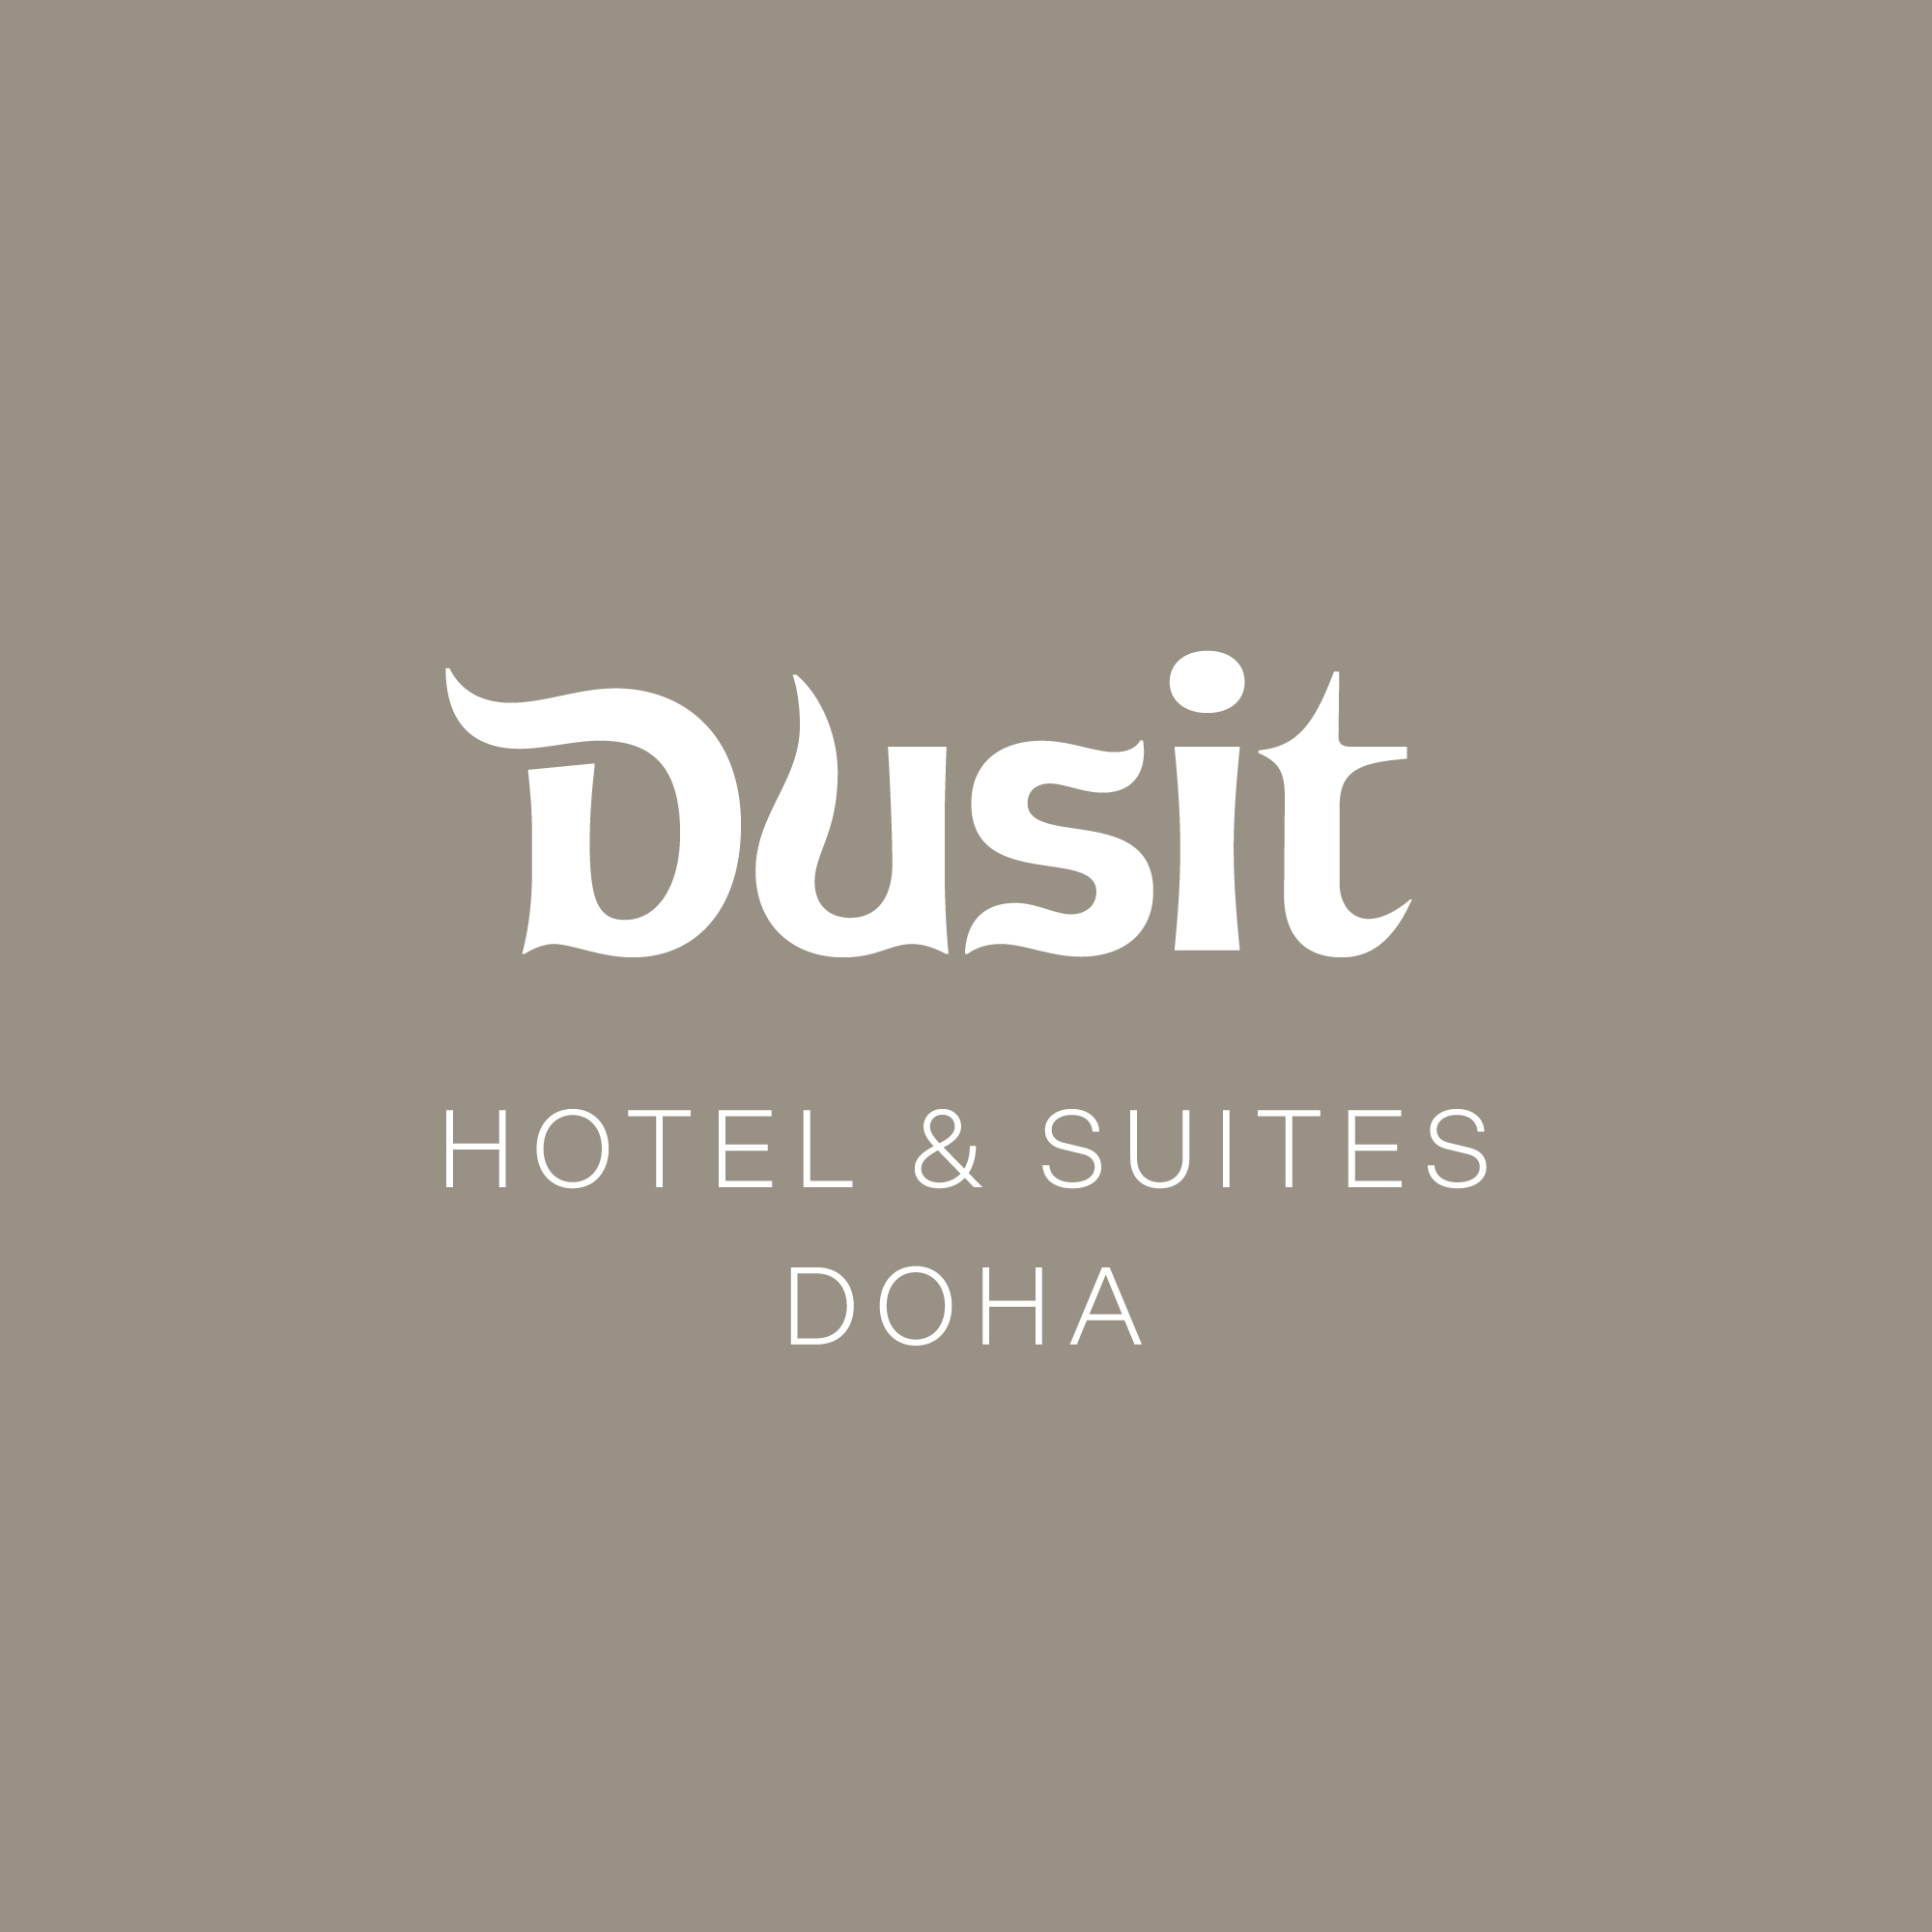 Image result for Dusit Hotel & Suites - Doha